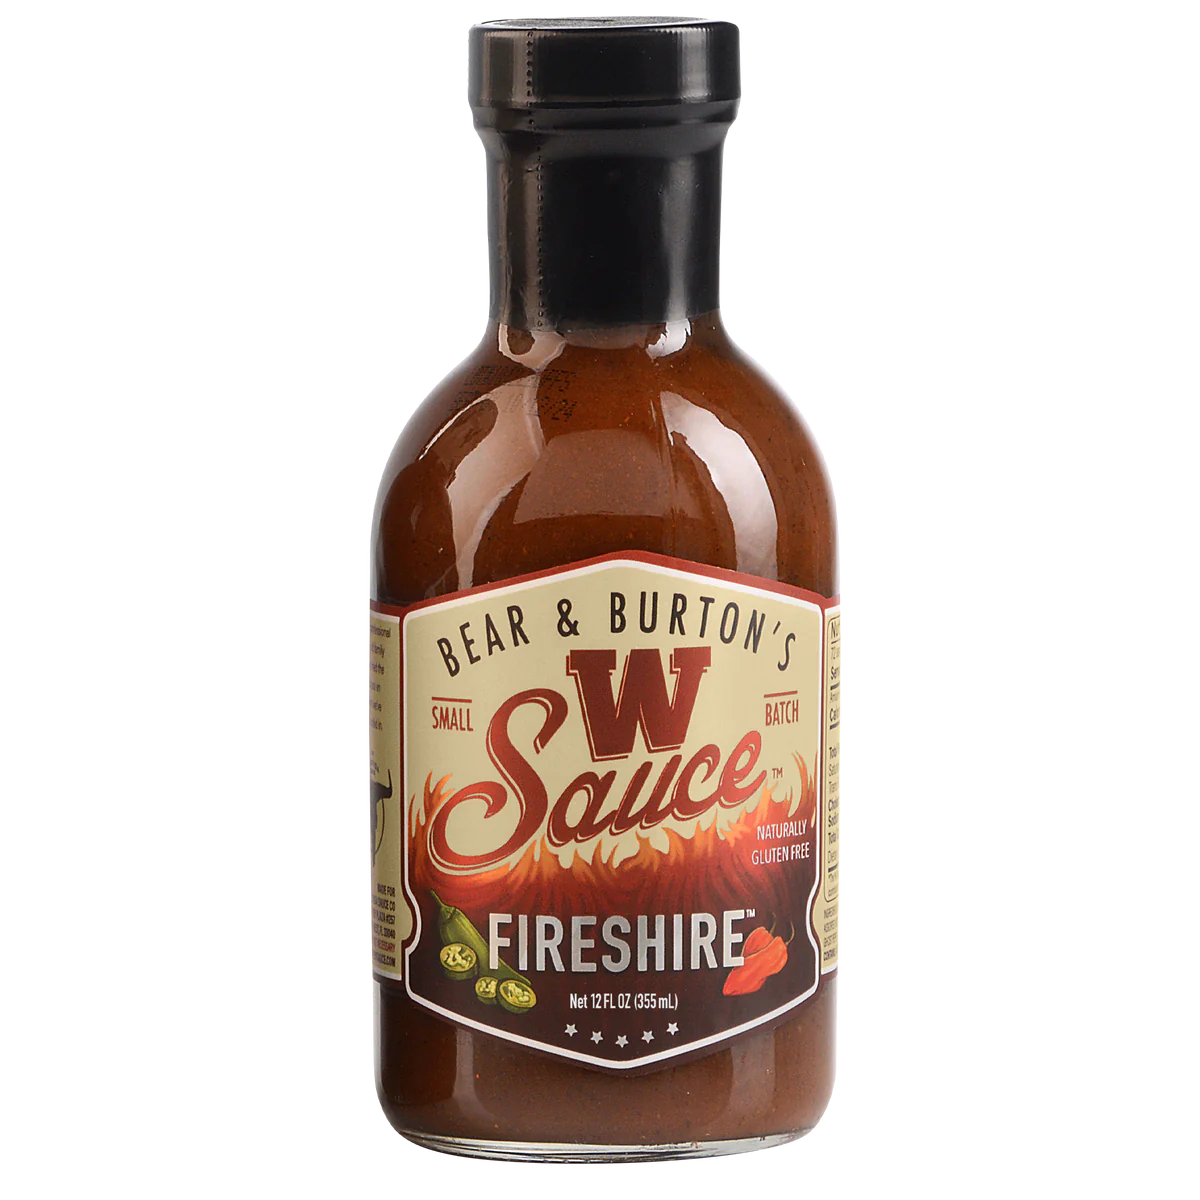 Bear & Burton Fireshire Sauce - 12 OZ Bottle